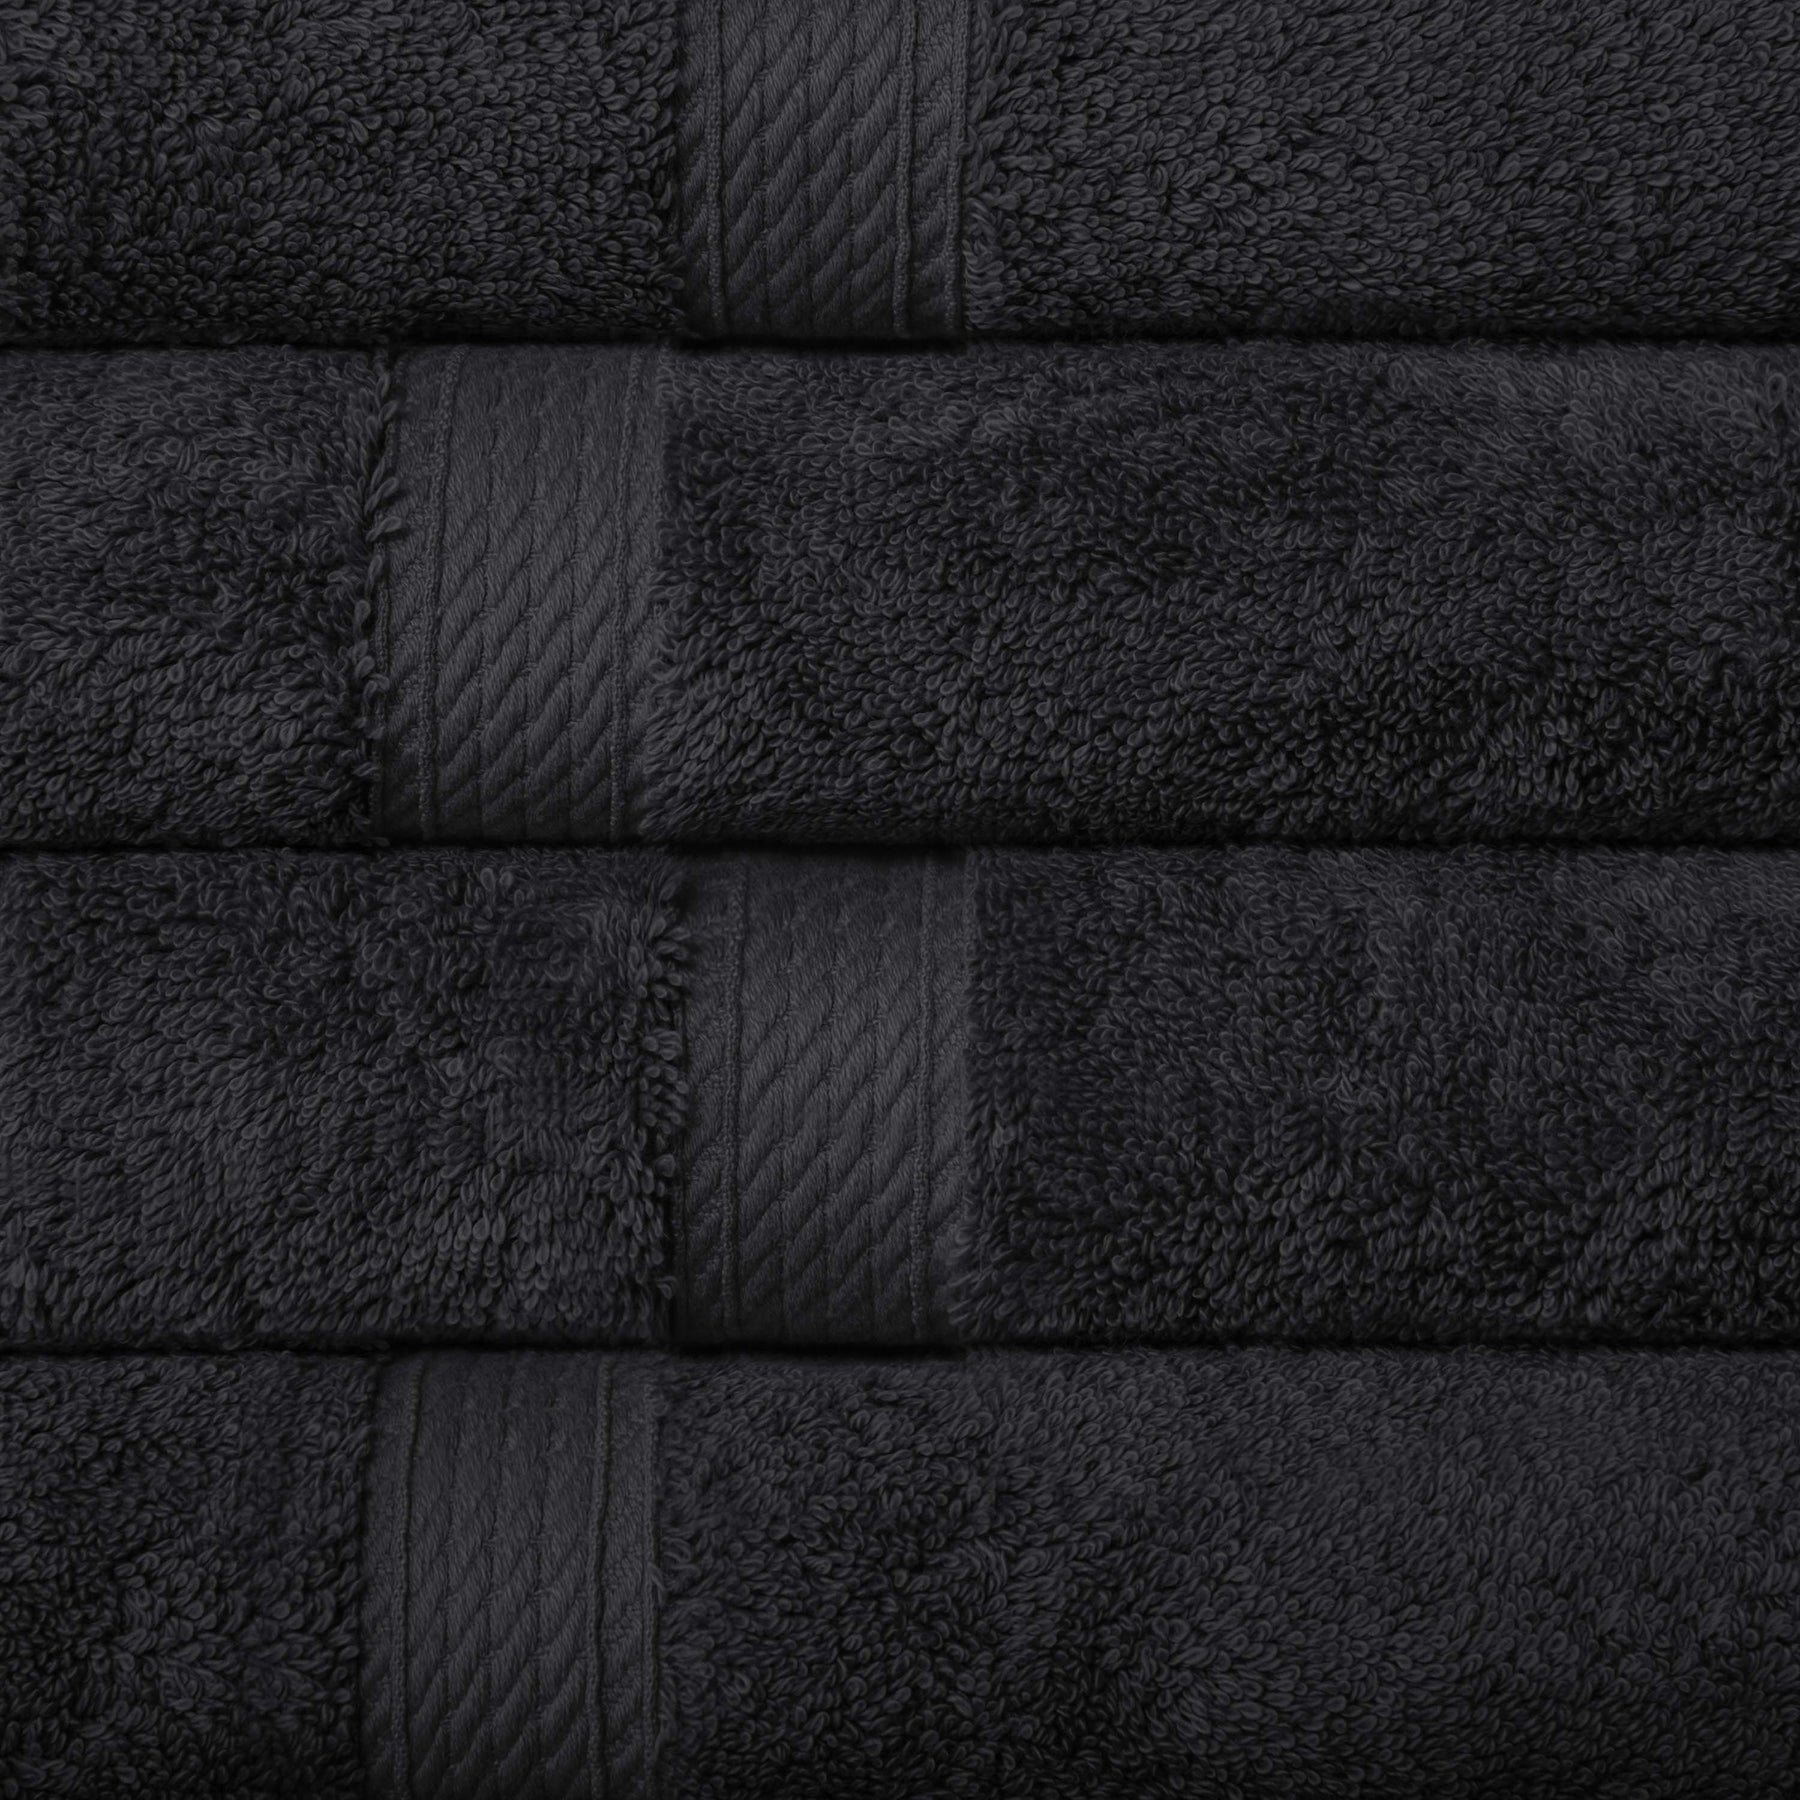 Superior Egyptian Cotton Plush Heavyweight Absorbent Luxury Soft Bath Towel -  Black